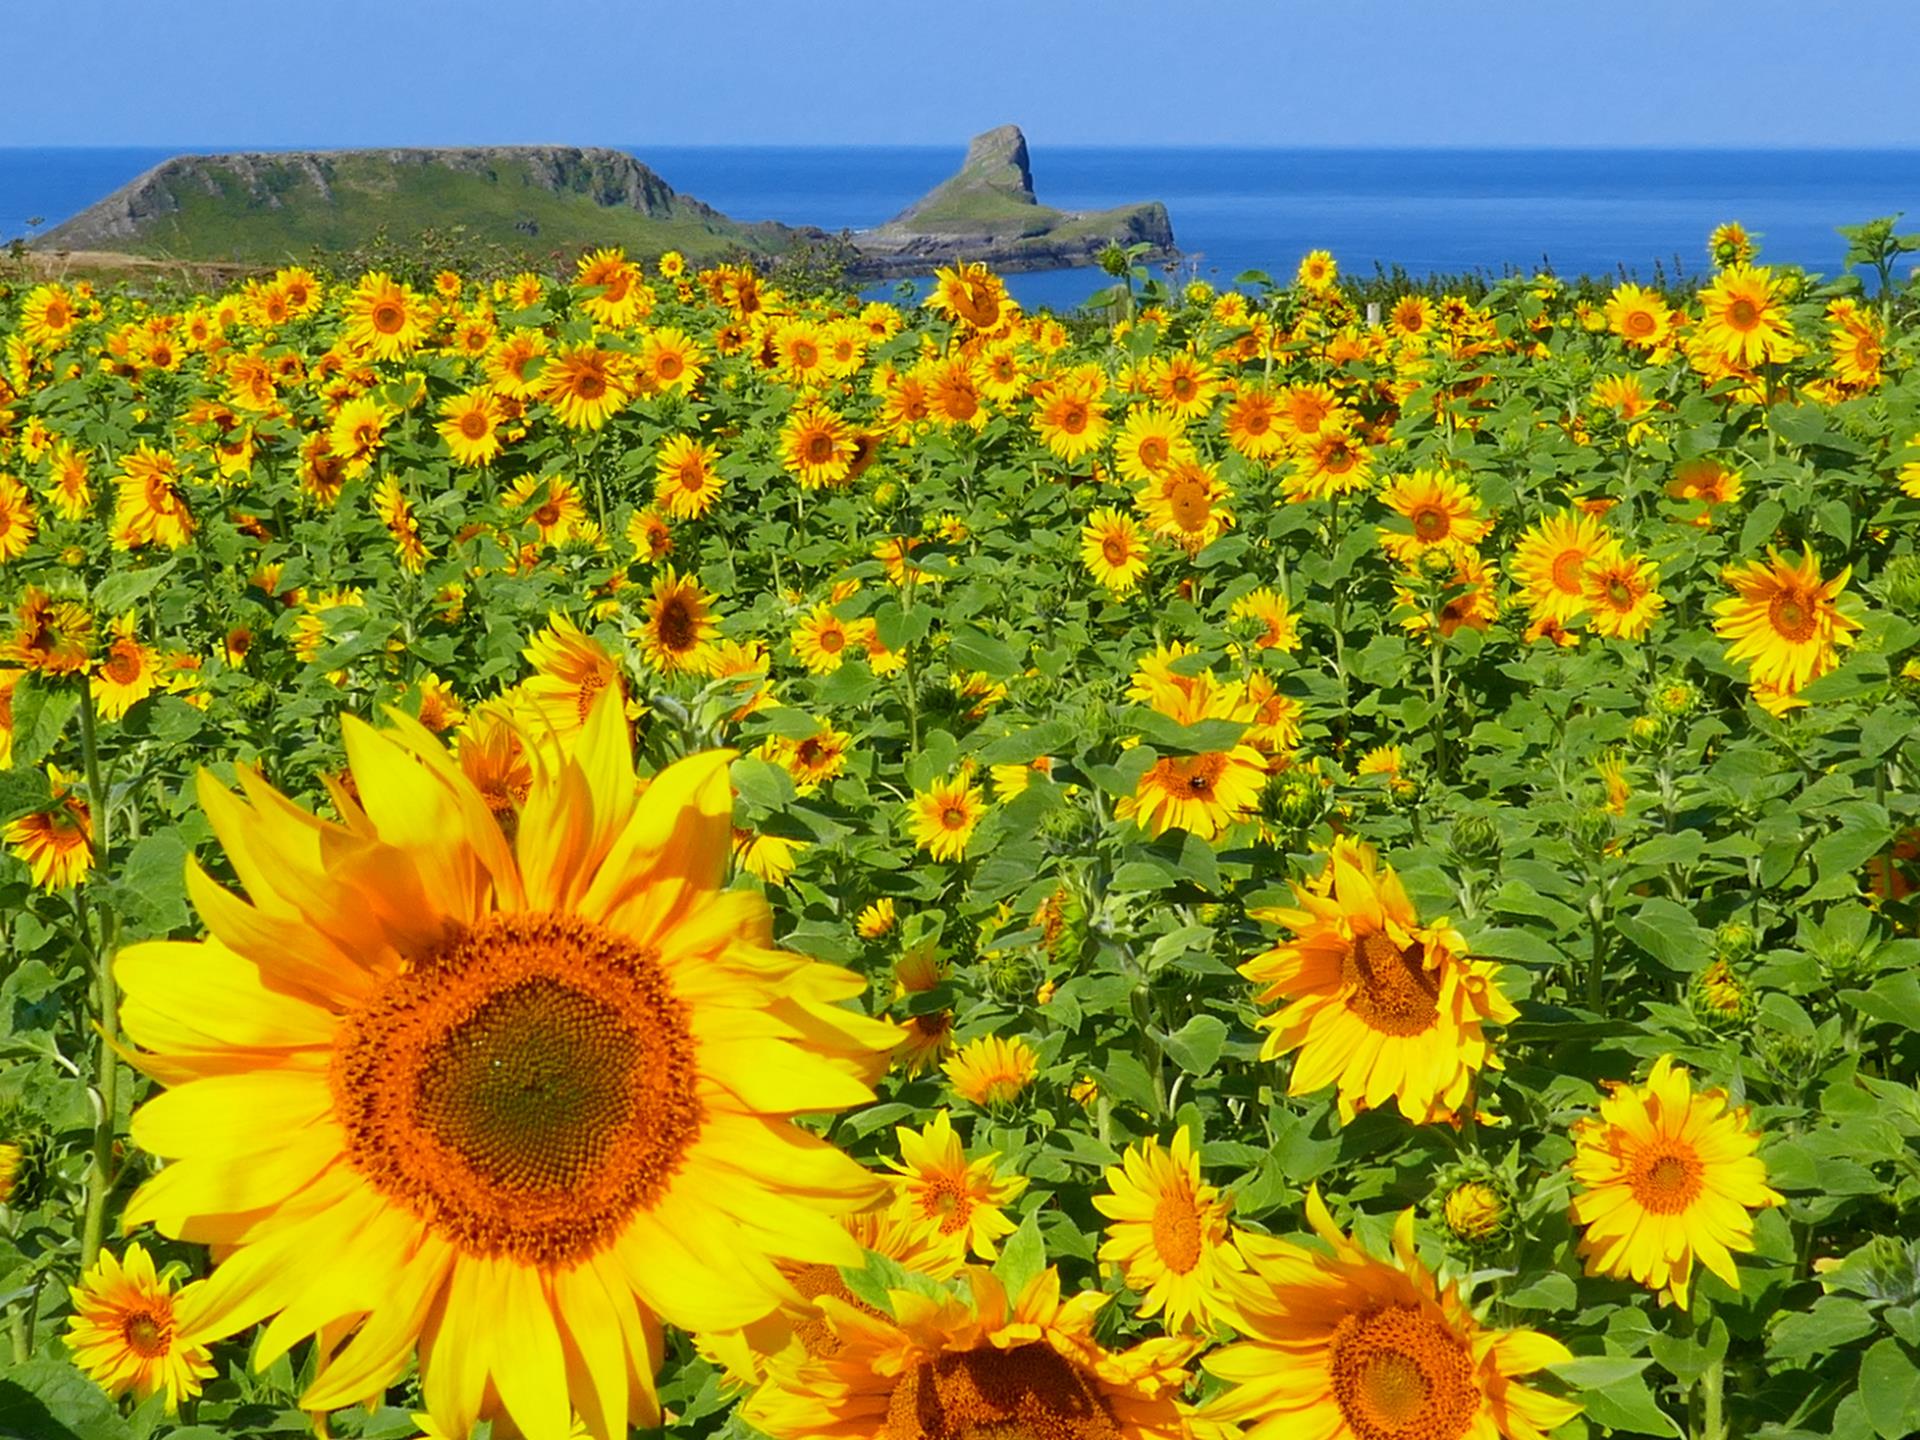 Sunflowers and Worm's Head, Gower Peninsular